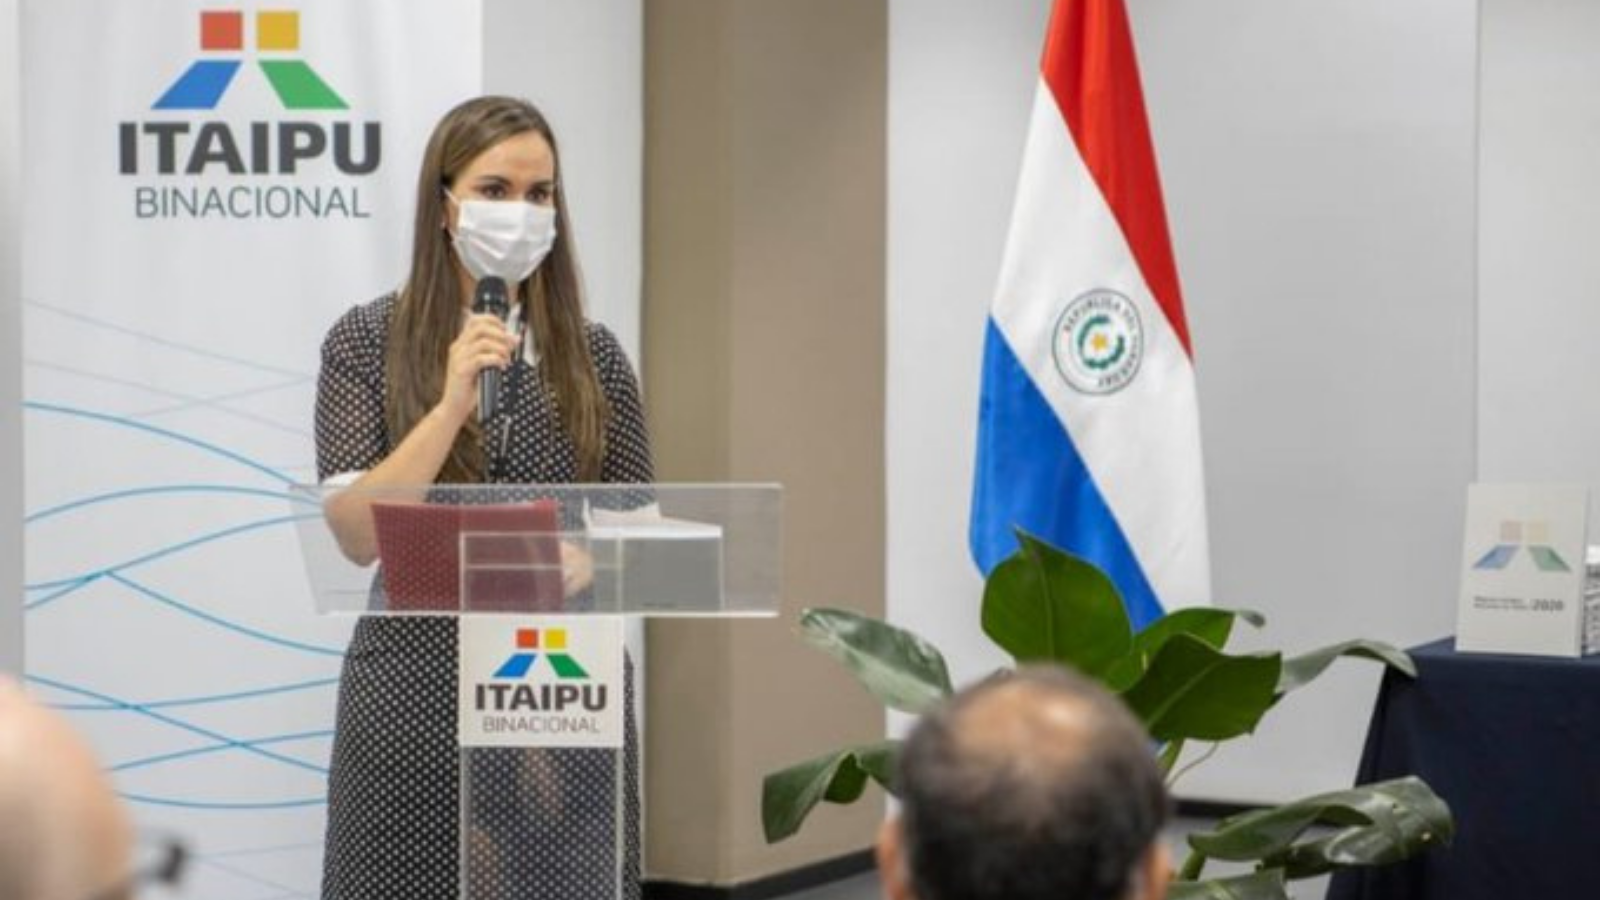 Itaipu refuses to disclose expenses